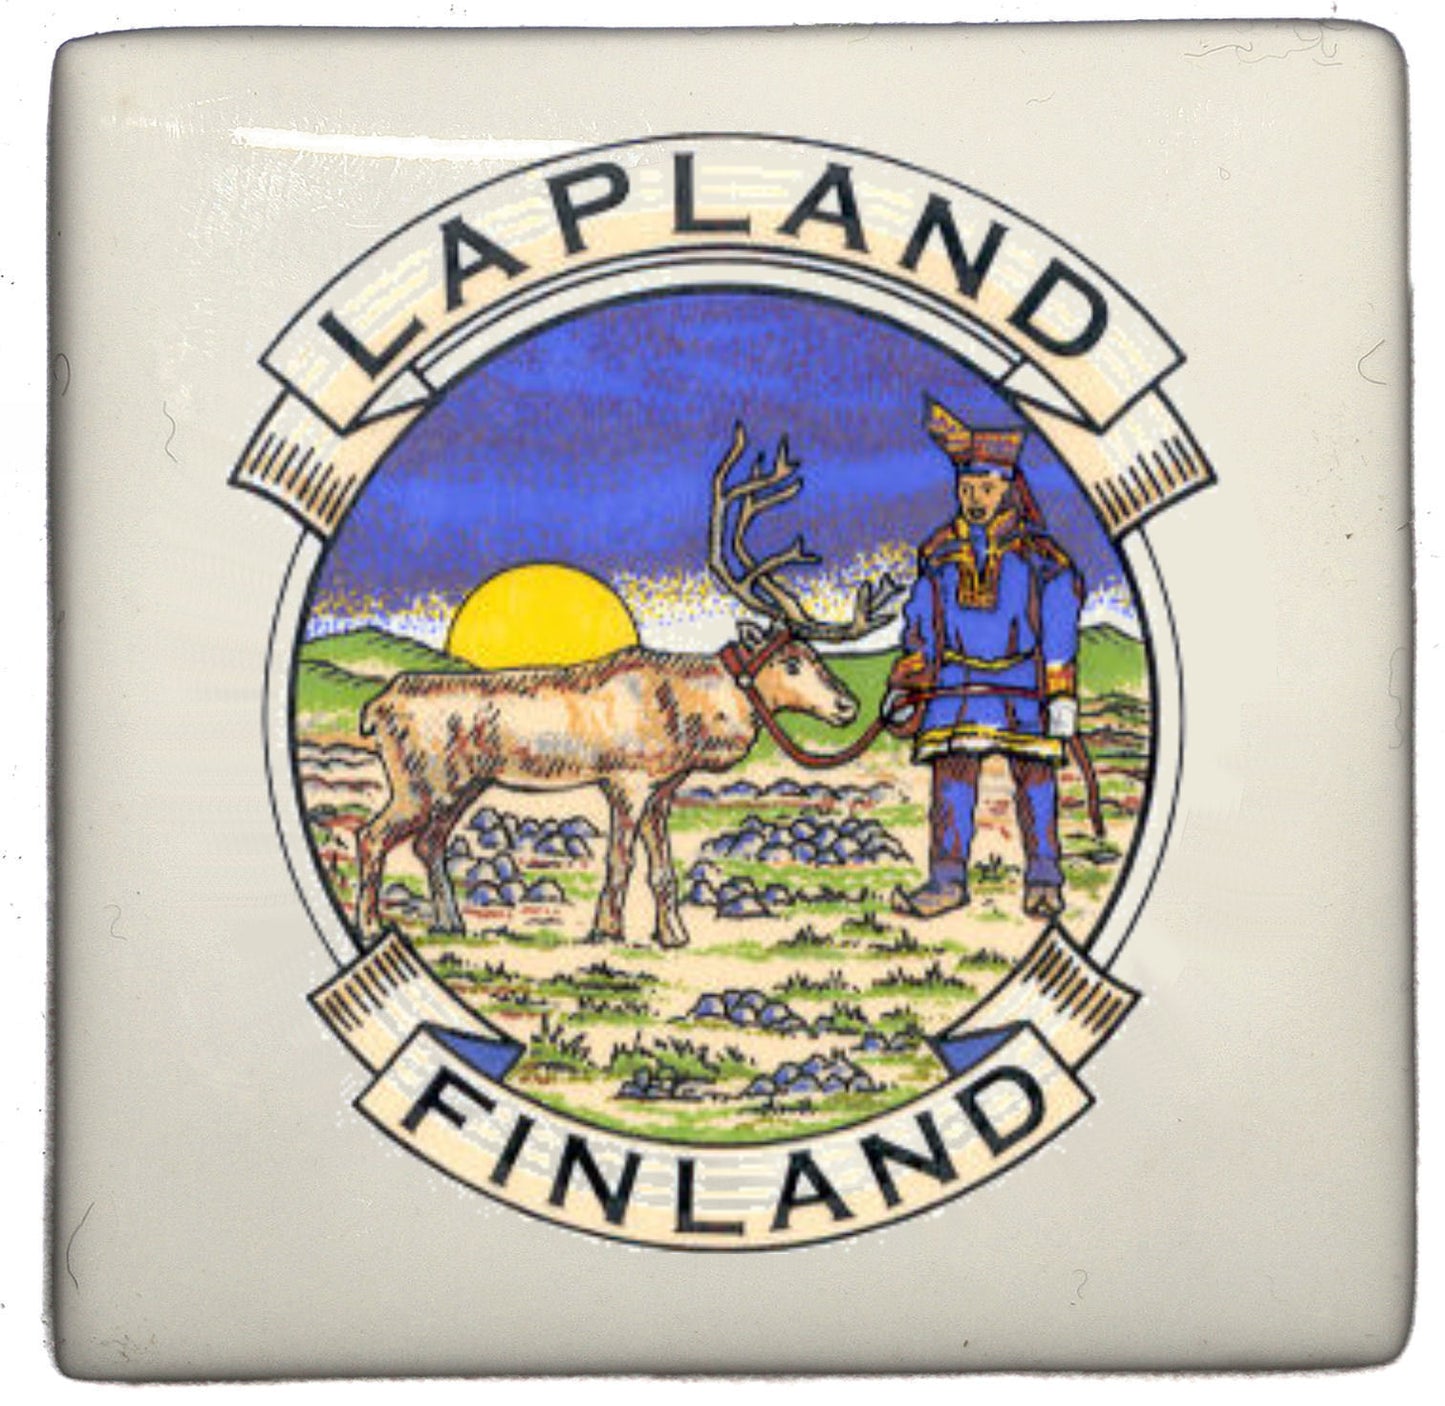 Posliinimagneetti Lapland m5x5/5013